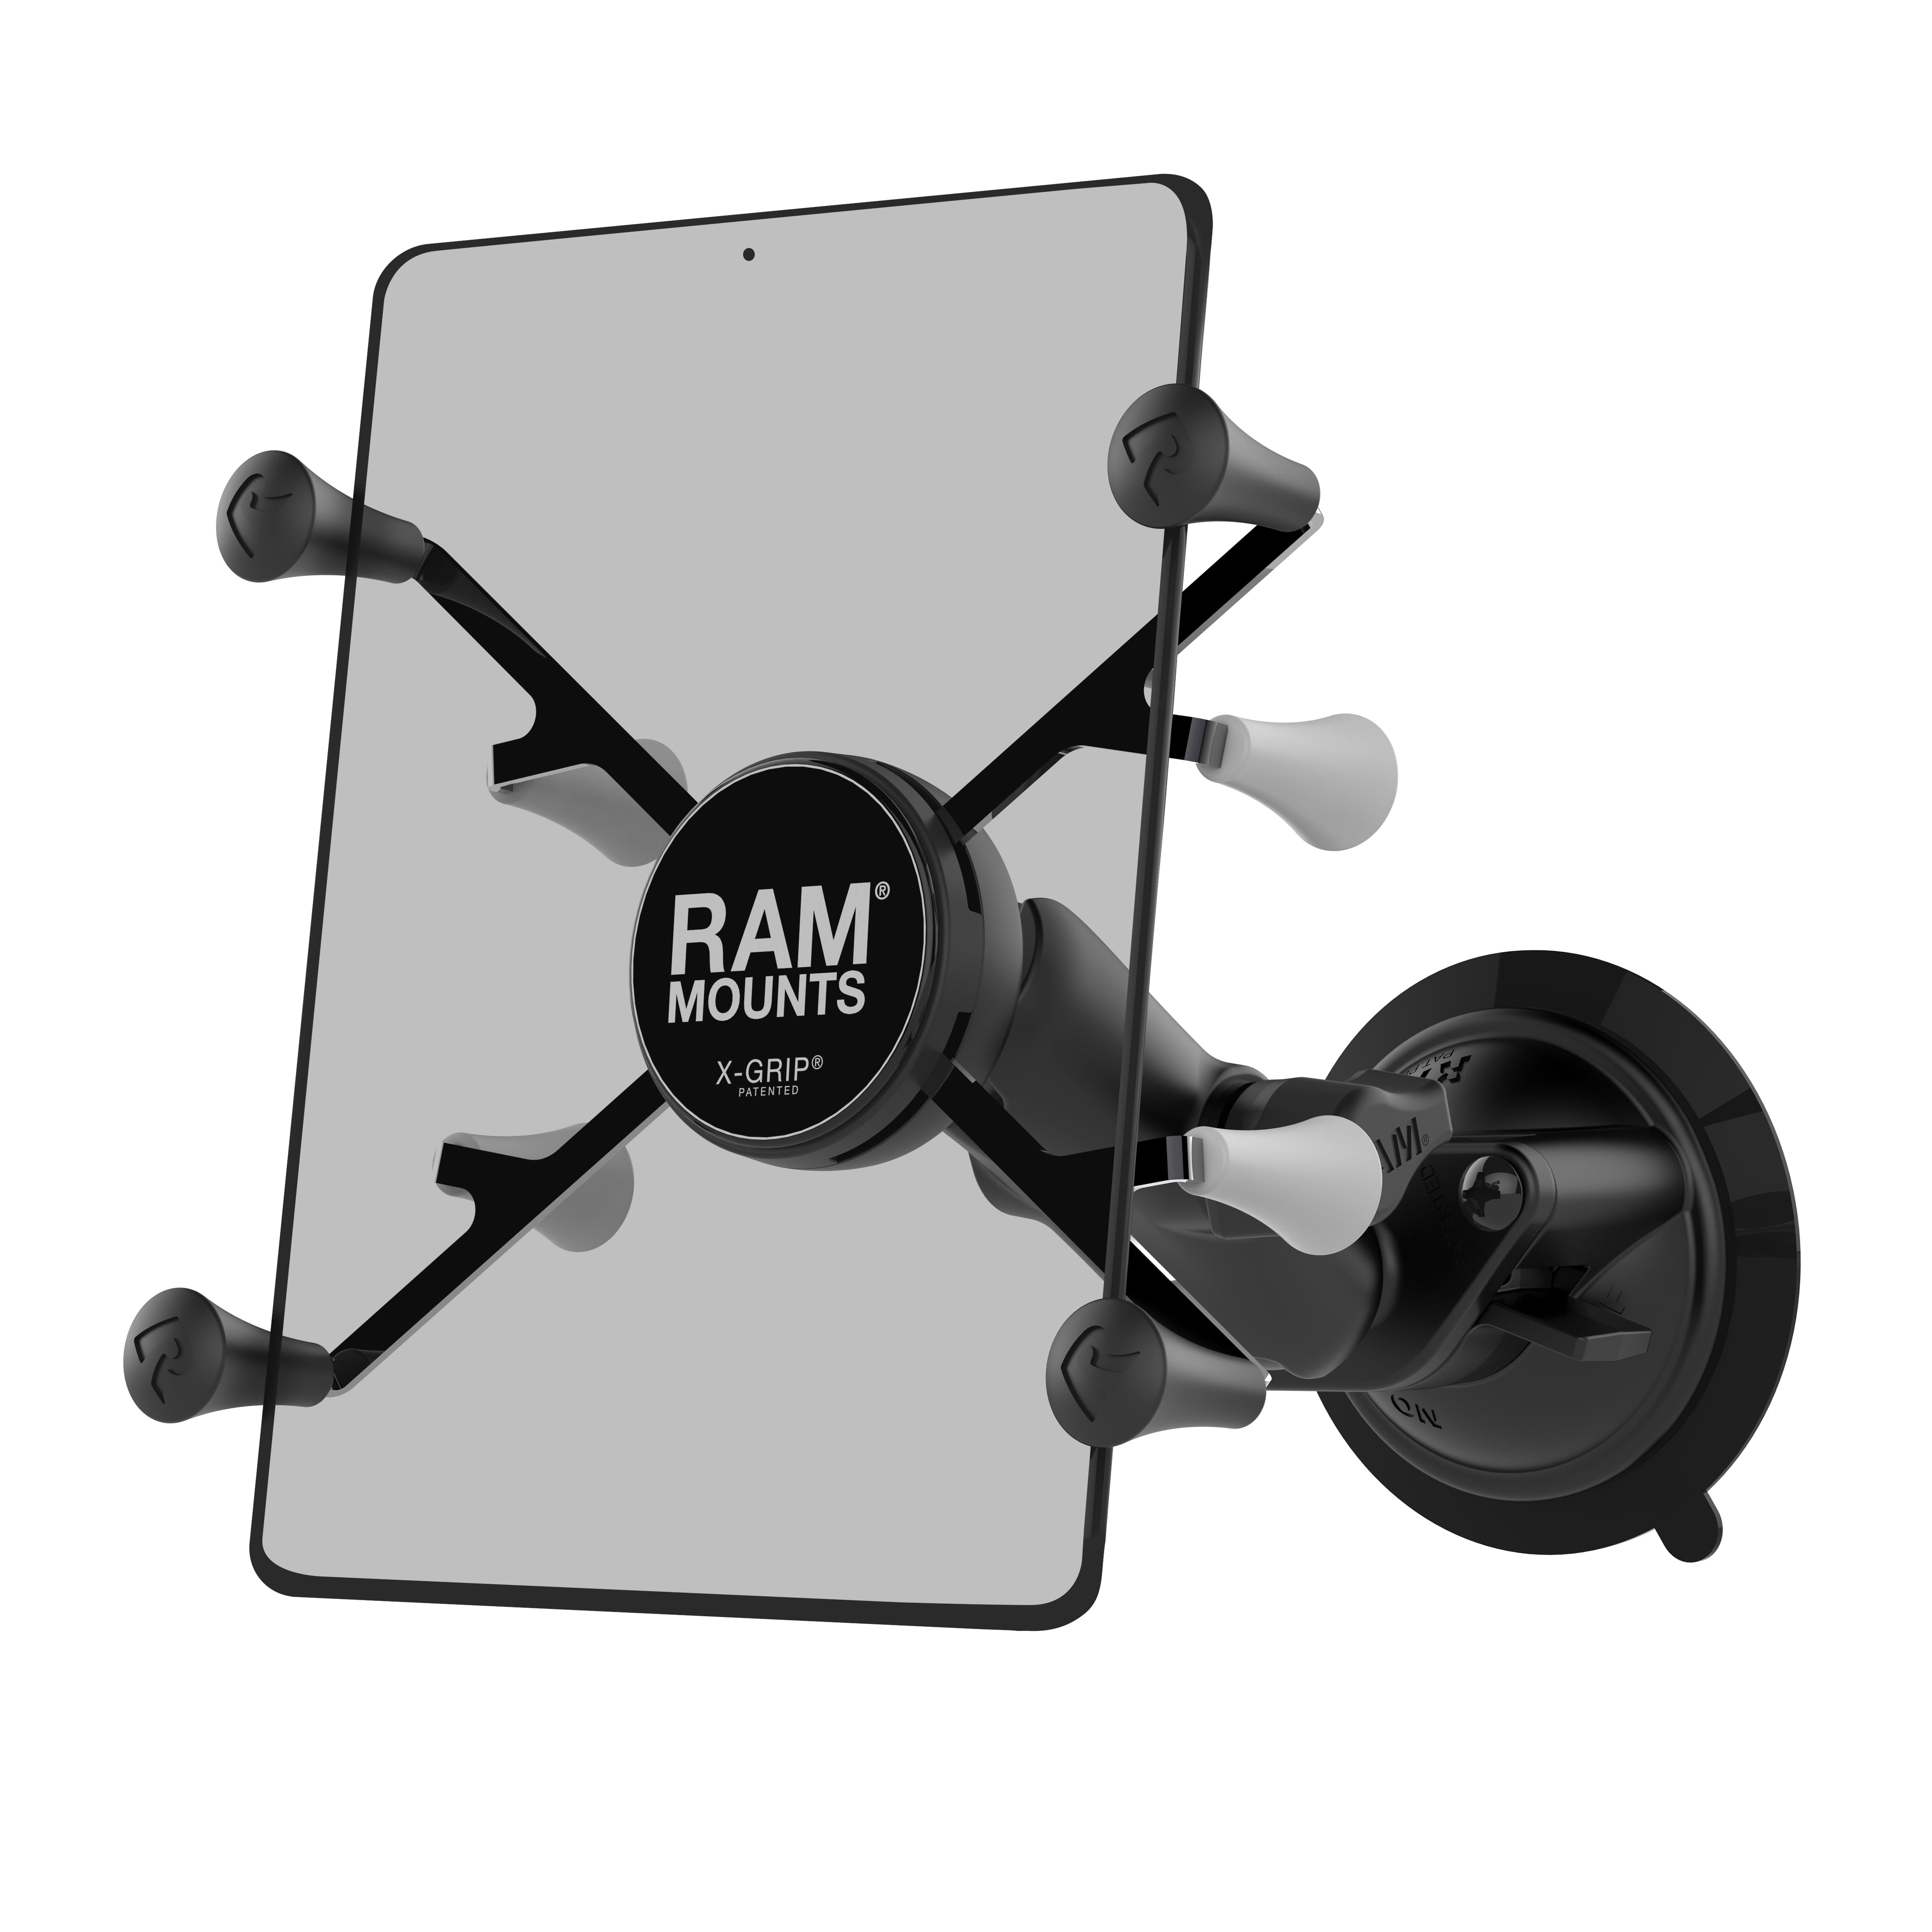  RAM Mounts (RAM-B-138-UN8U Flat Surface Mount with X